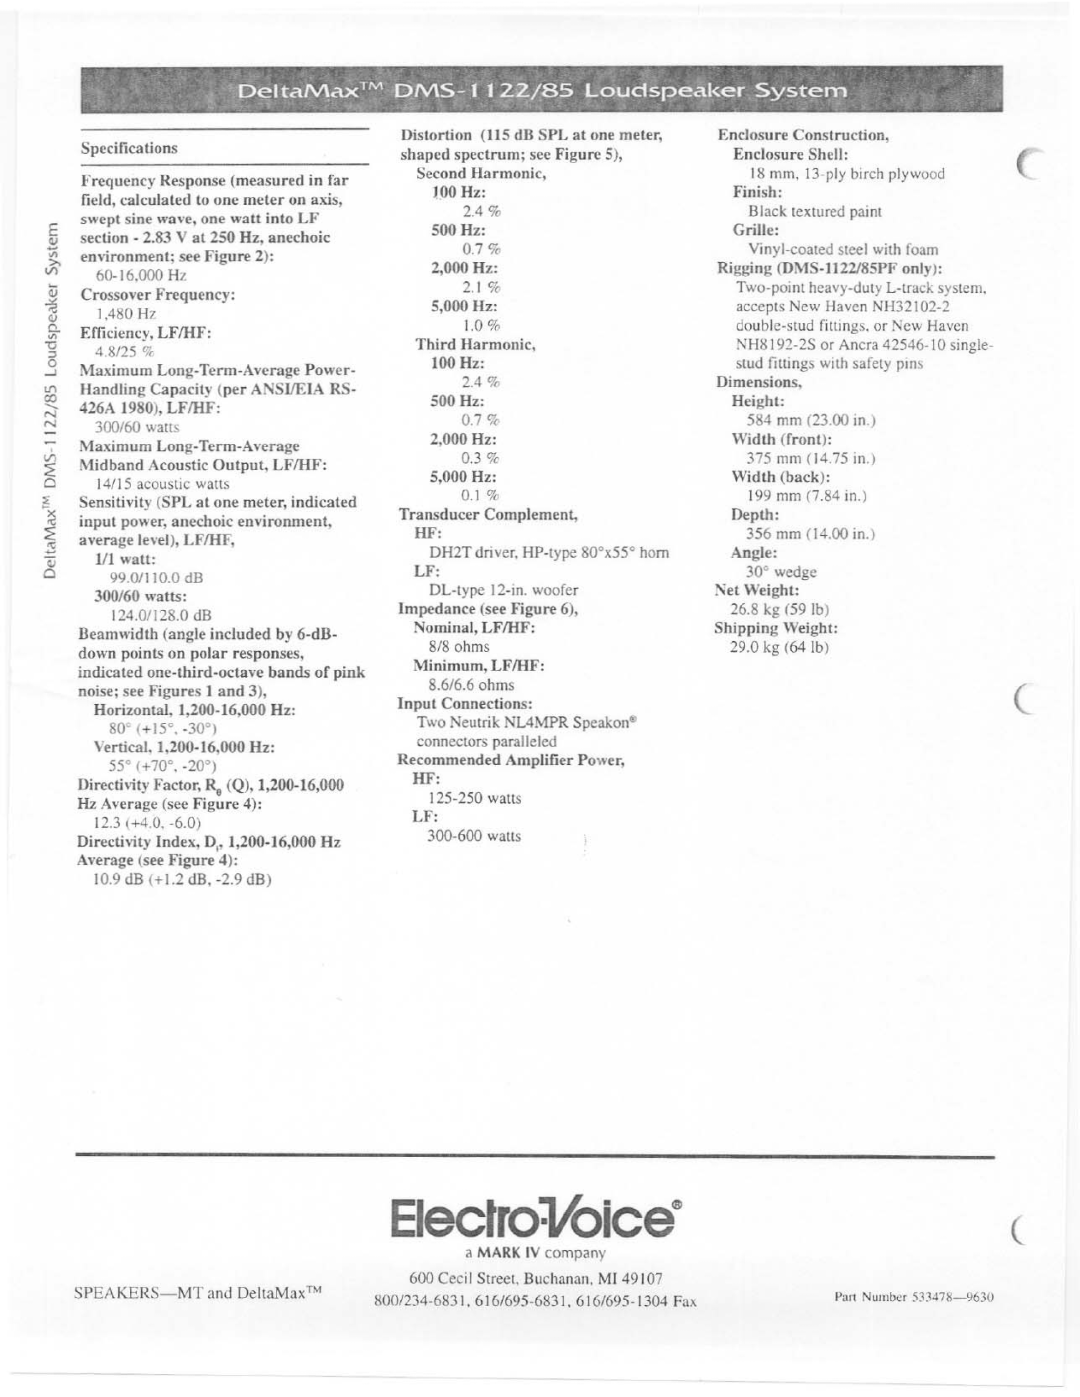 Electro-Voice DMS-1122/85 manual 